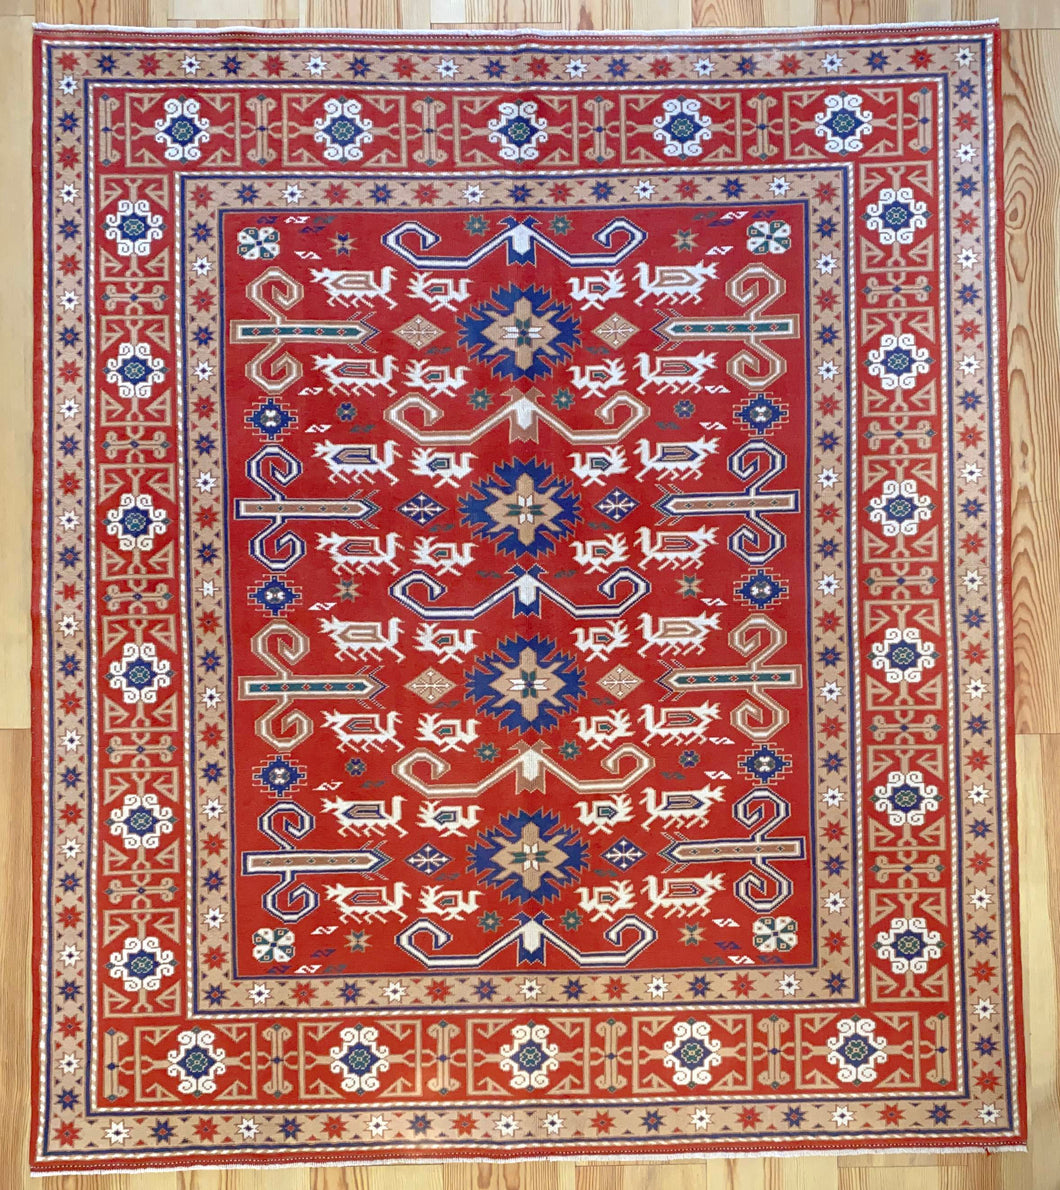 6x7 Vintage Central Anatolian Caucasian 'Perpedil' Design 'York' Turkish Area Rug | Symmetrical Stylized Motifs Vibrant Colors Geometric Border | SKU 624